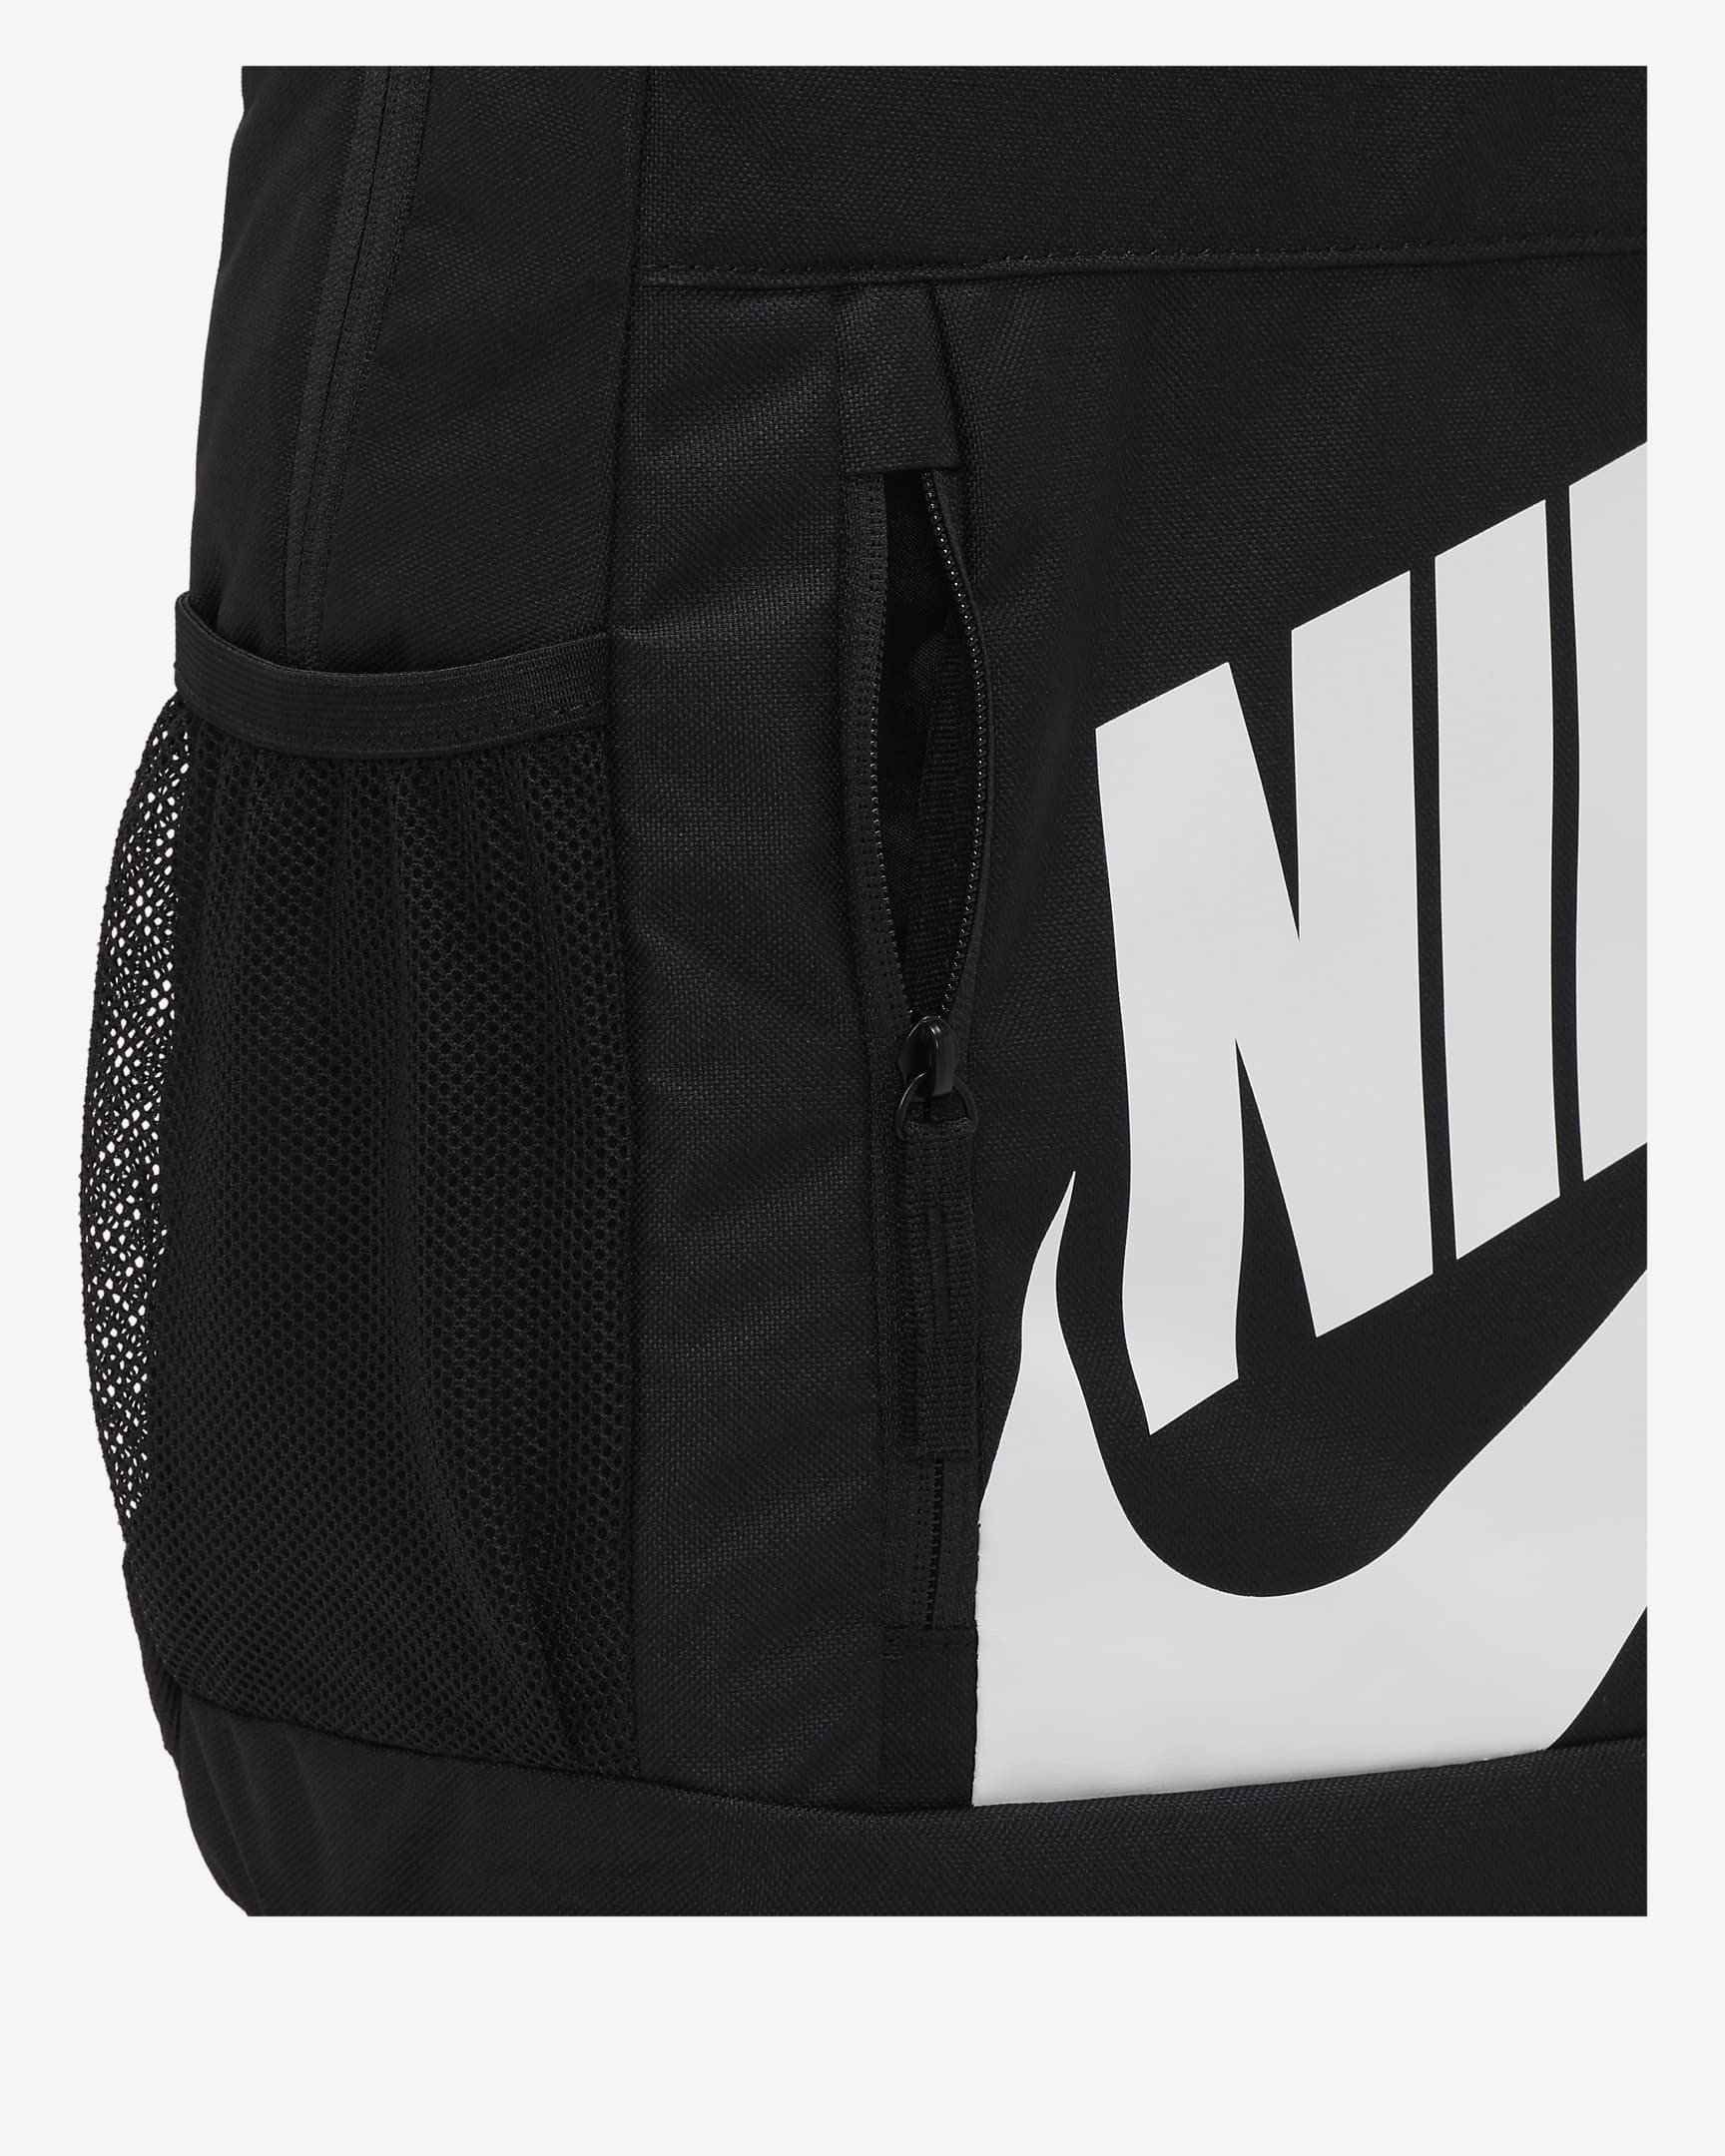 Nike Elemental Kids Backpack Black/Black